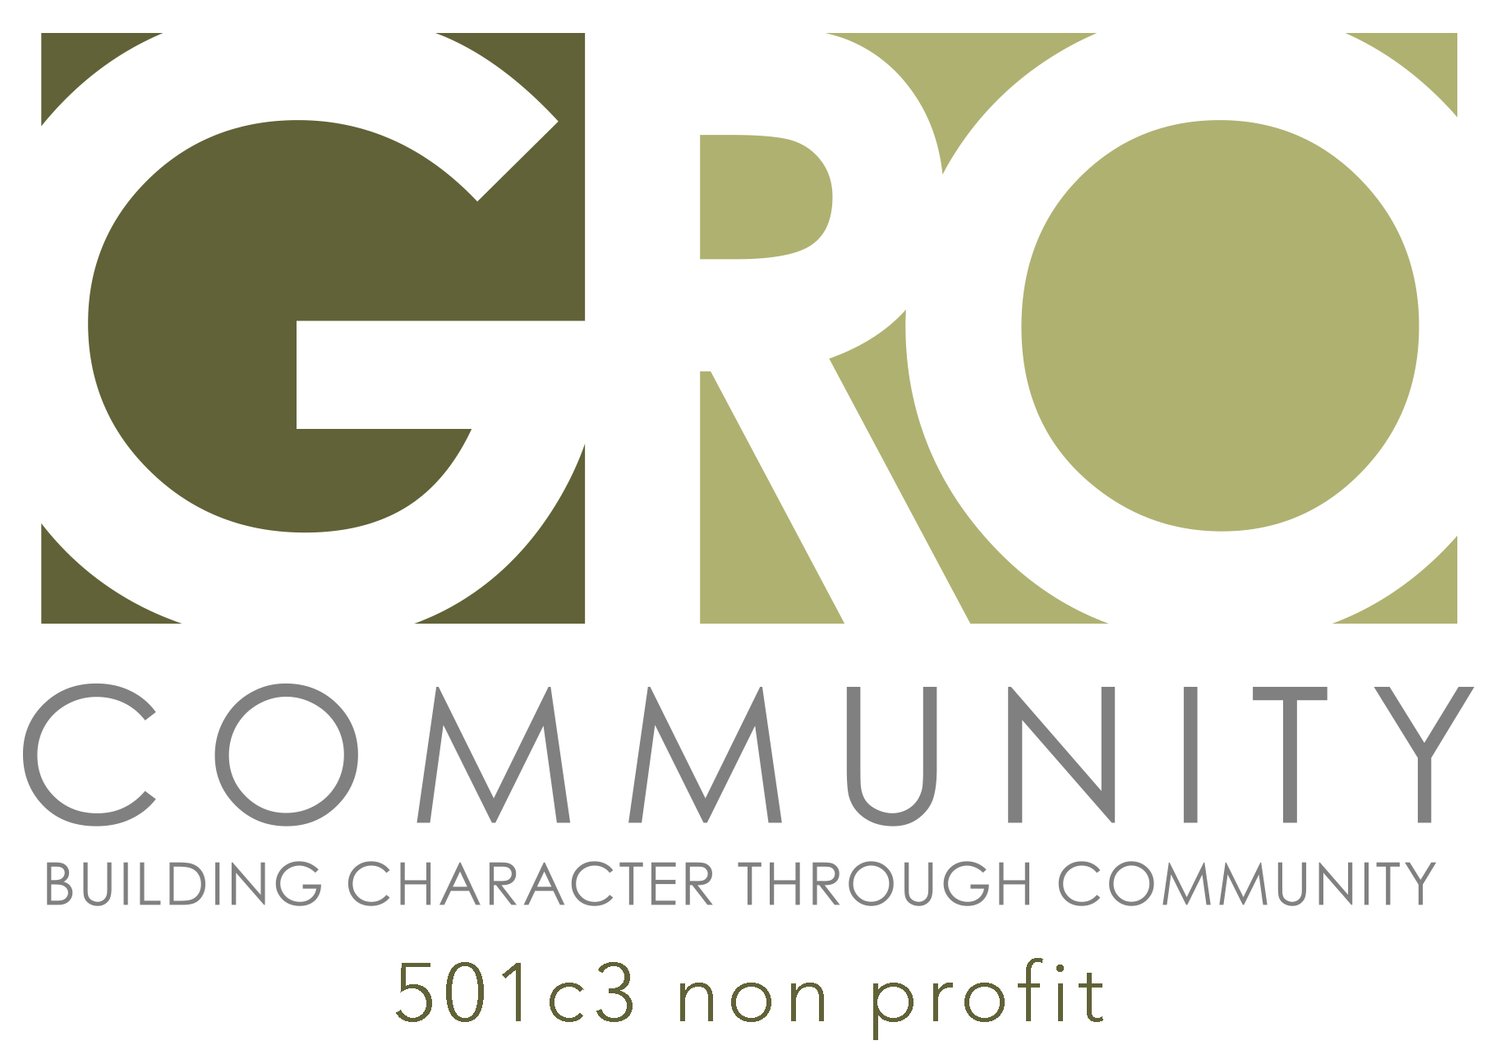 GRO Community